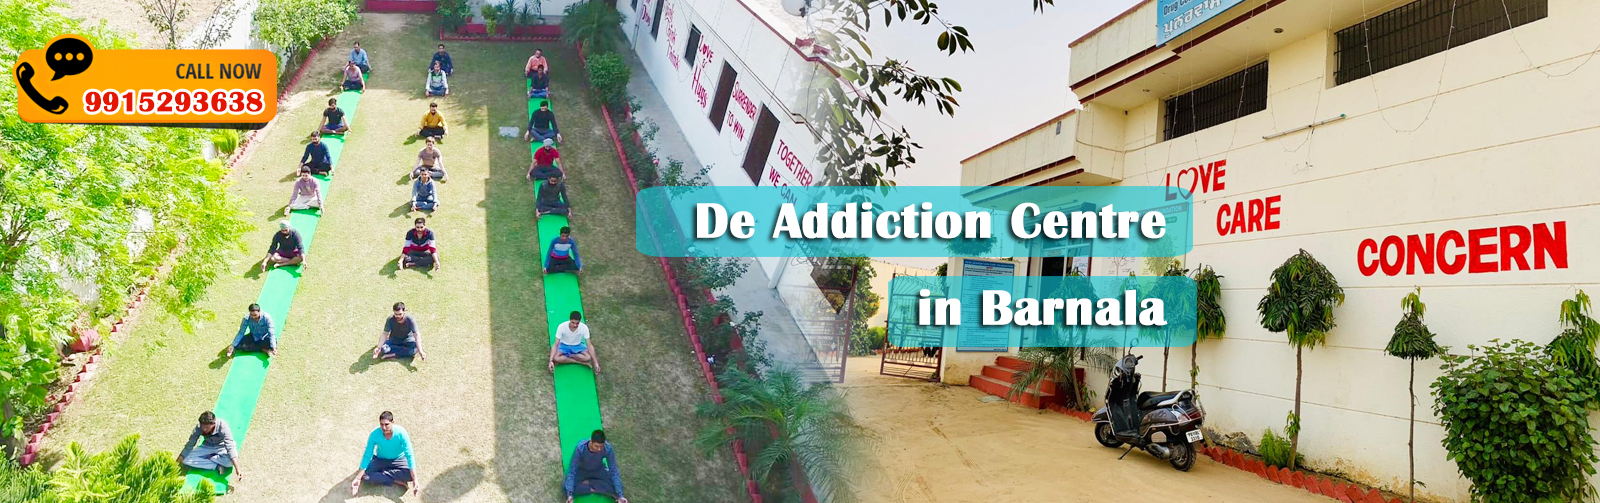 De Addiction Centre in Barnala